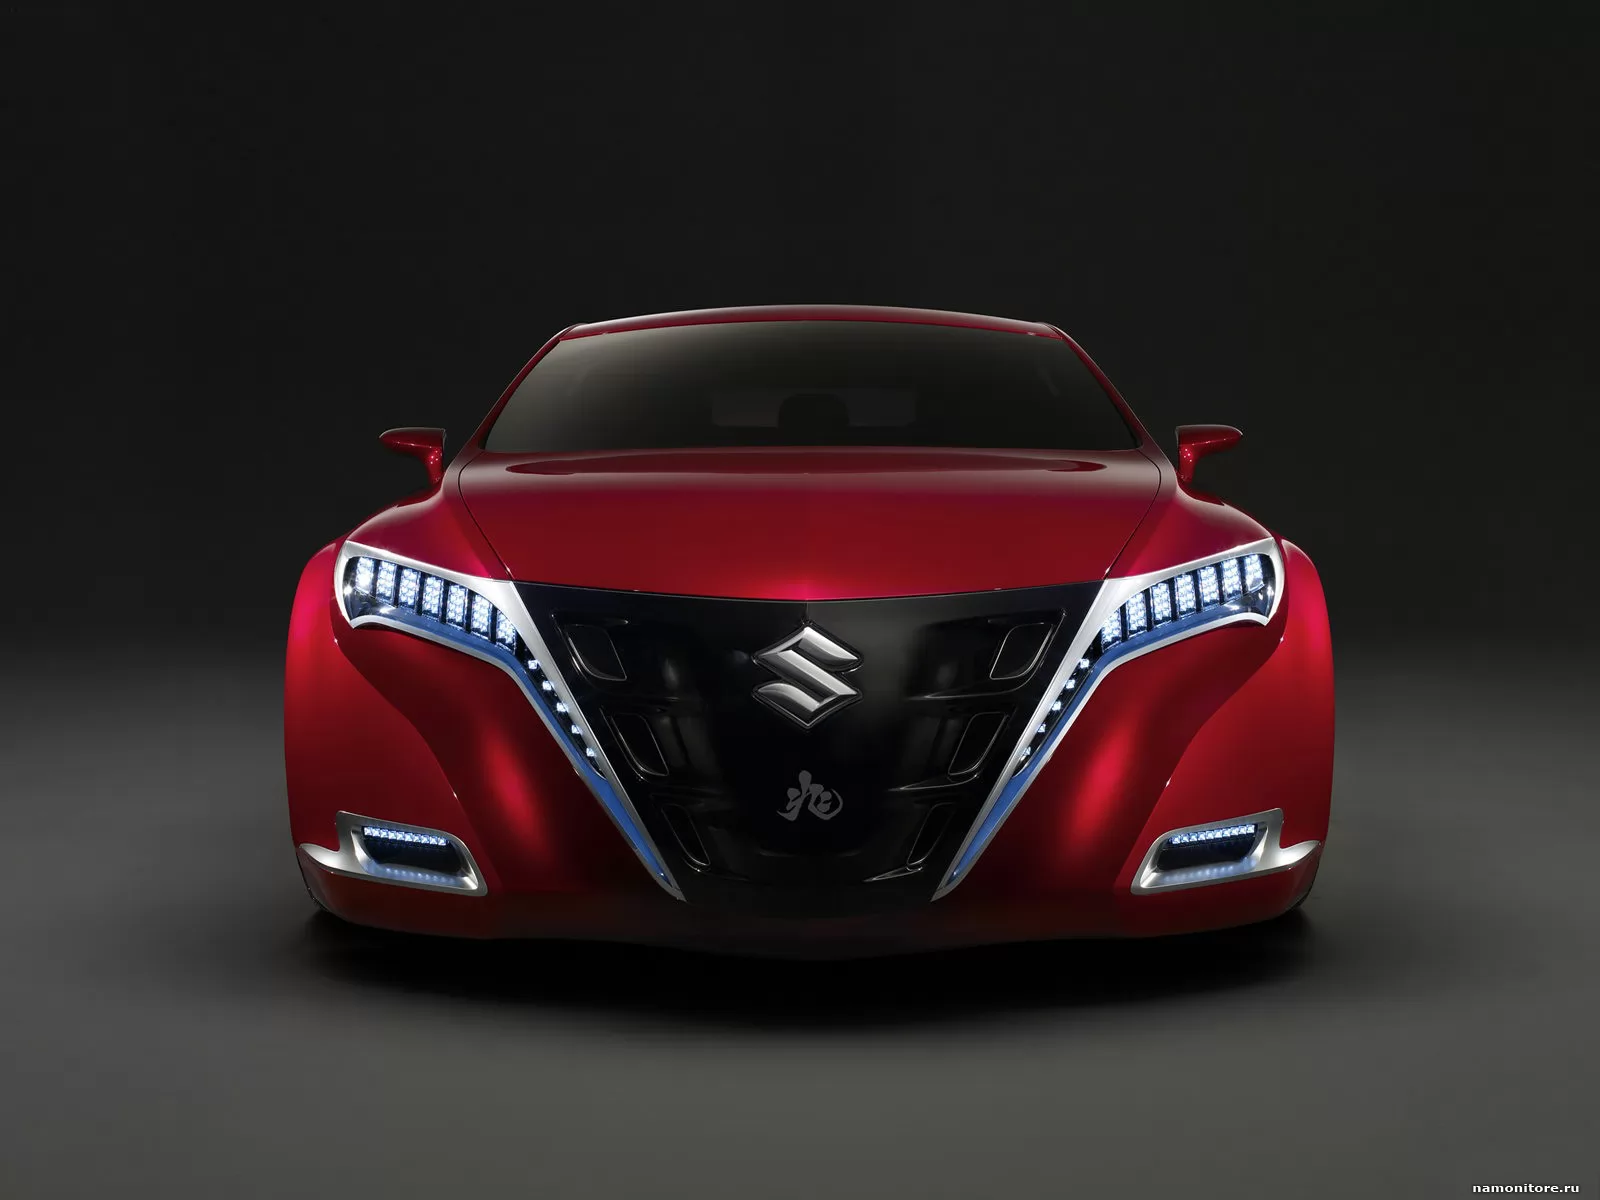 Suzuki Kizashi Concept, Suzuki, автомобили, концепт, красное, техника х